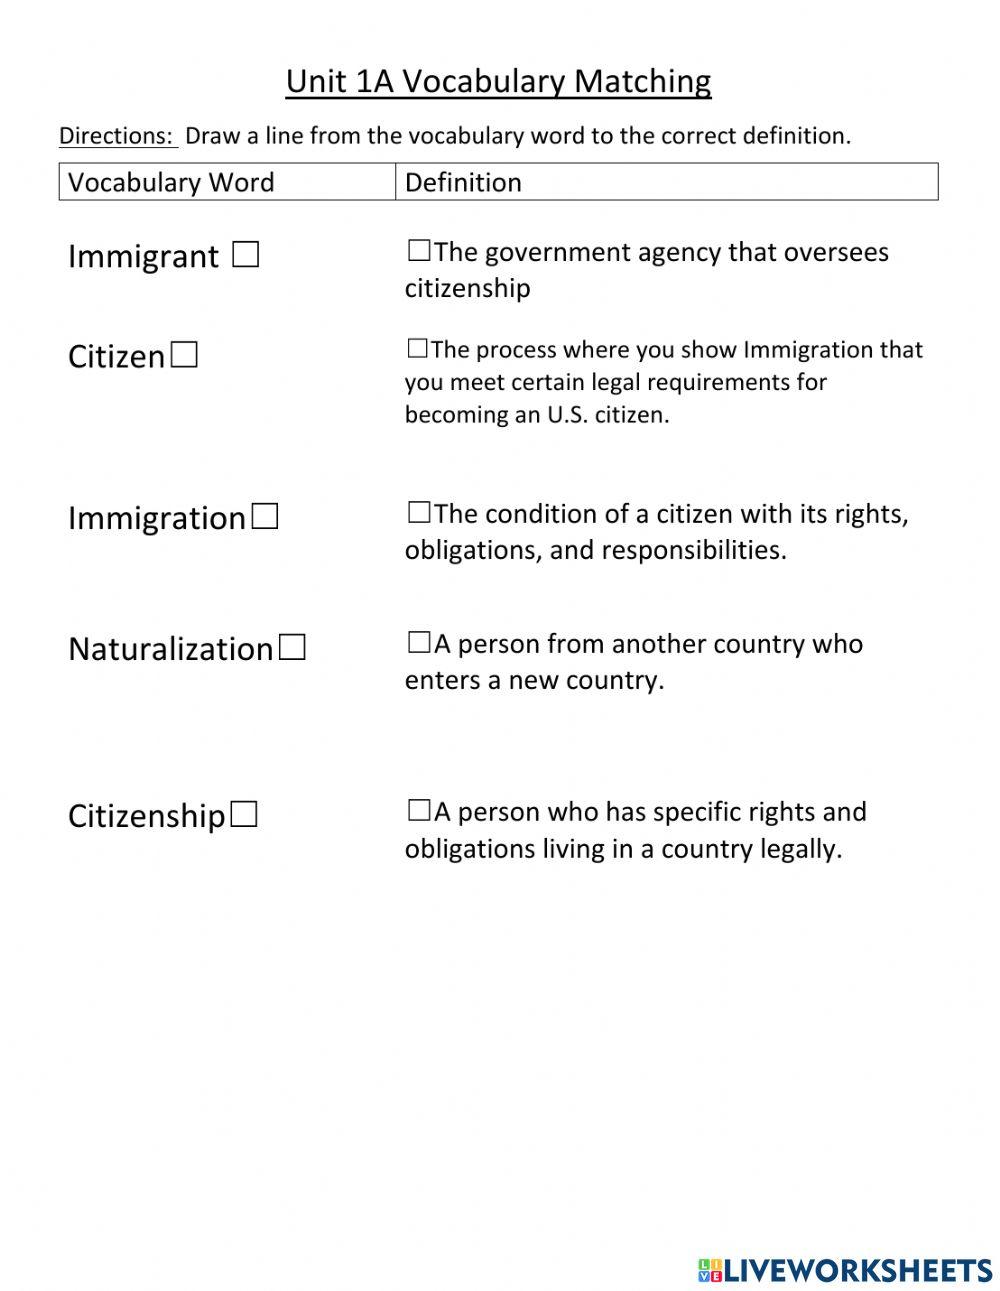 Unit 1A Paths to Citizenship Vocabulary Matching